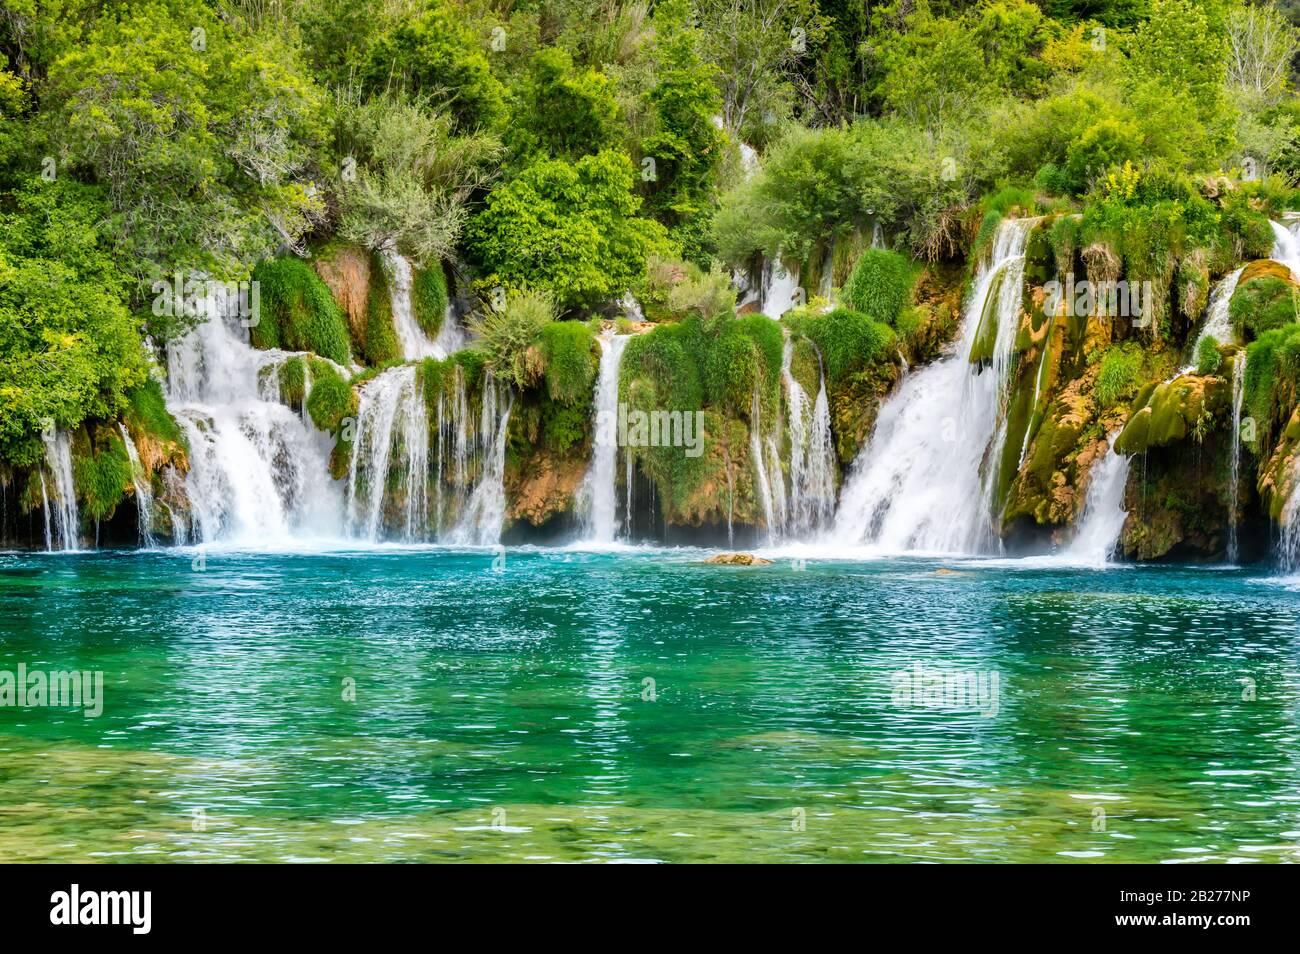 Beautiful Krka Waterfalls in Krka National Park, Croatia. Skradinski buk is the longest waterfall on the Krka River with clear turquoise water and den Stock Photo